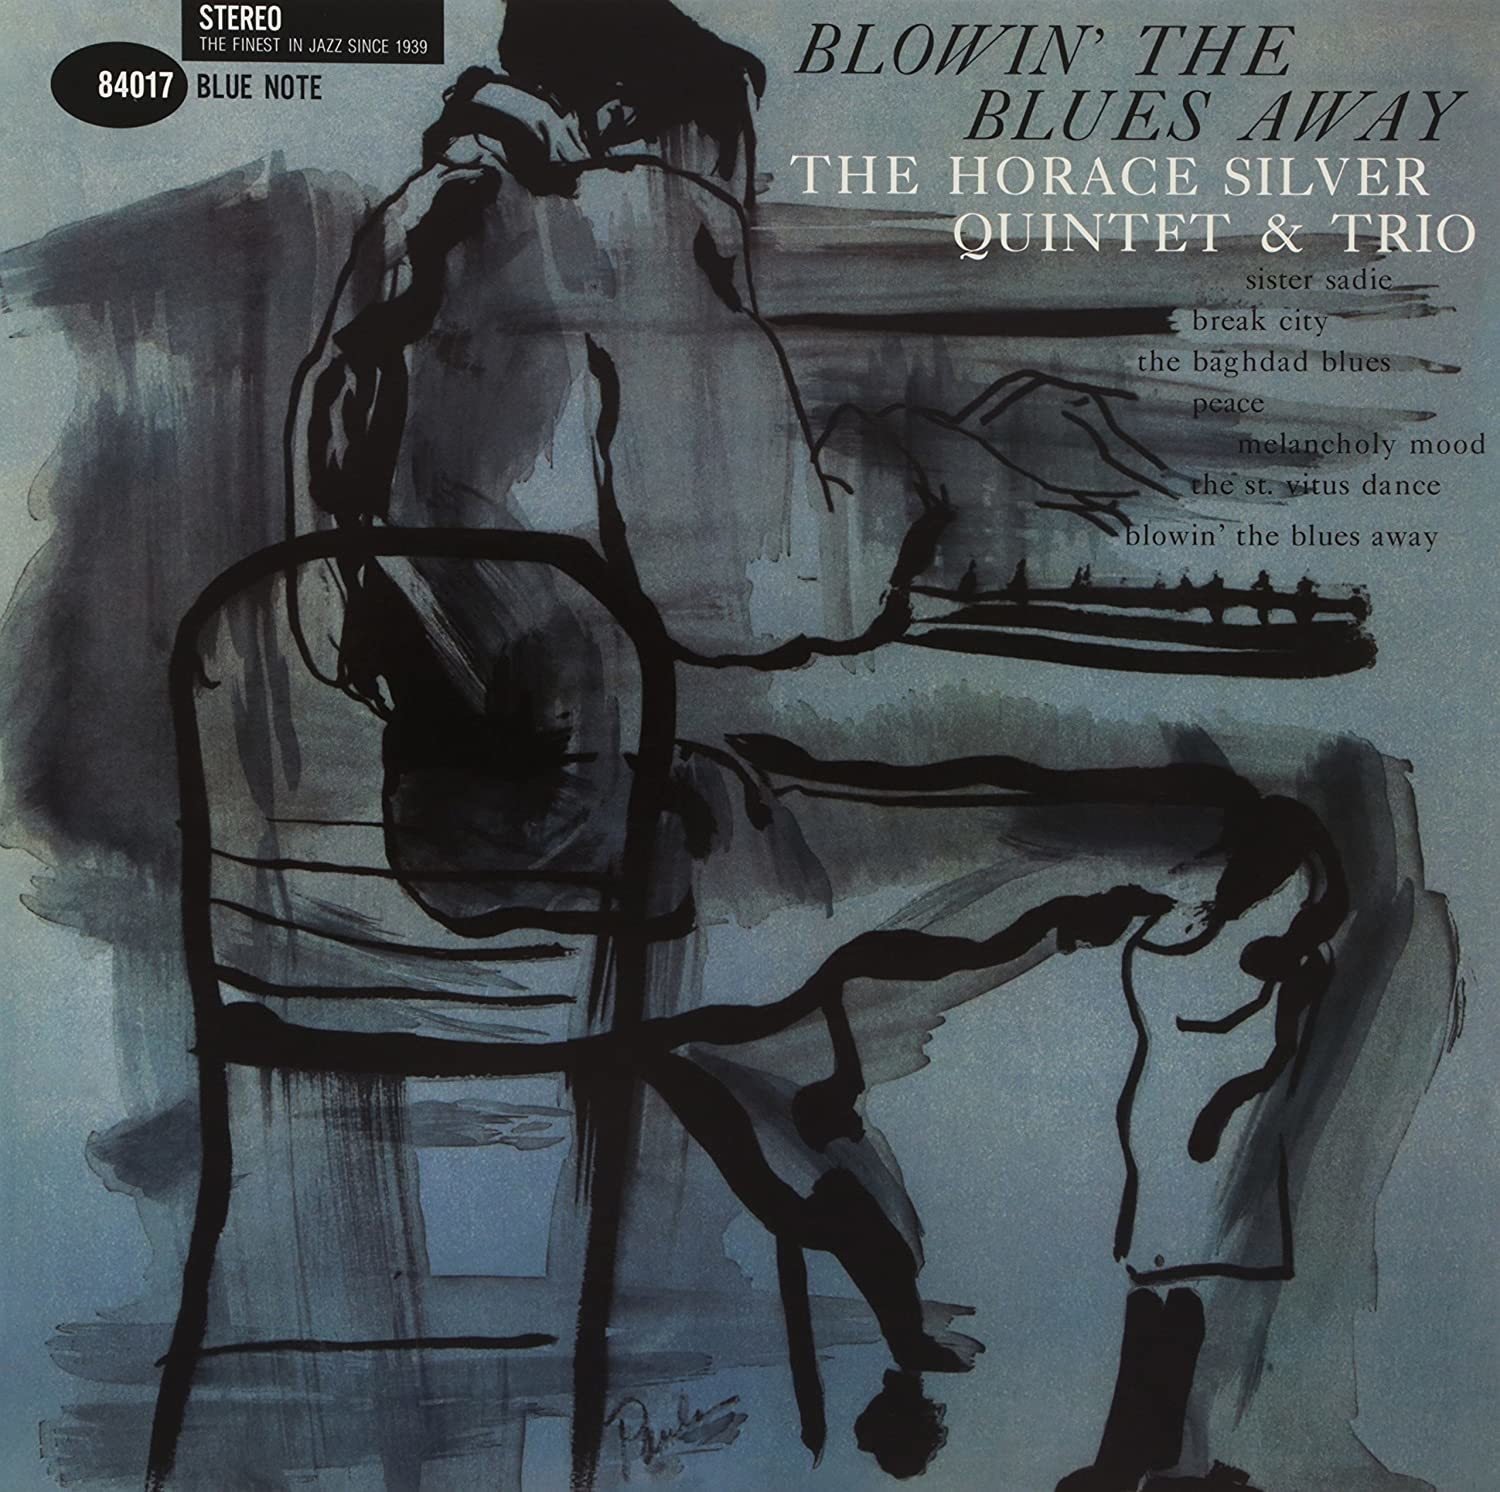 Vinylskiva Horace Silver - Blowin' The Blues Away (2 LP)